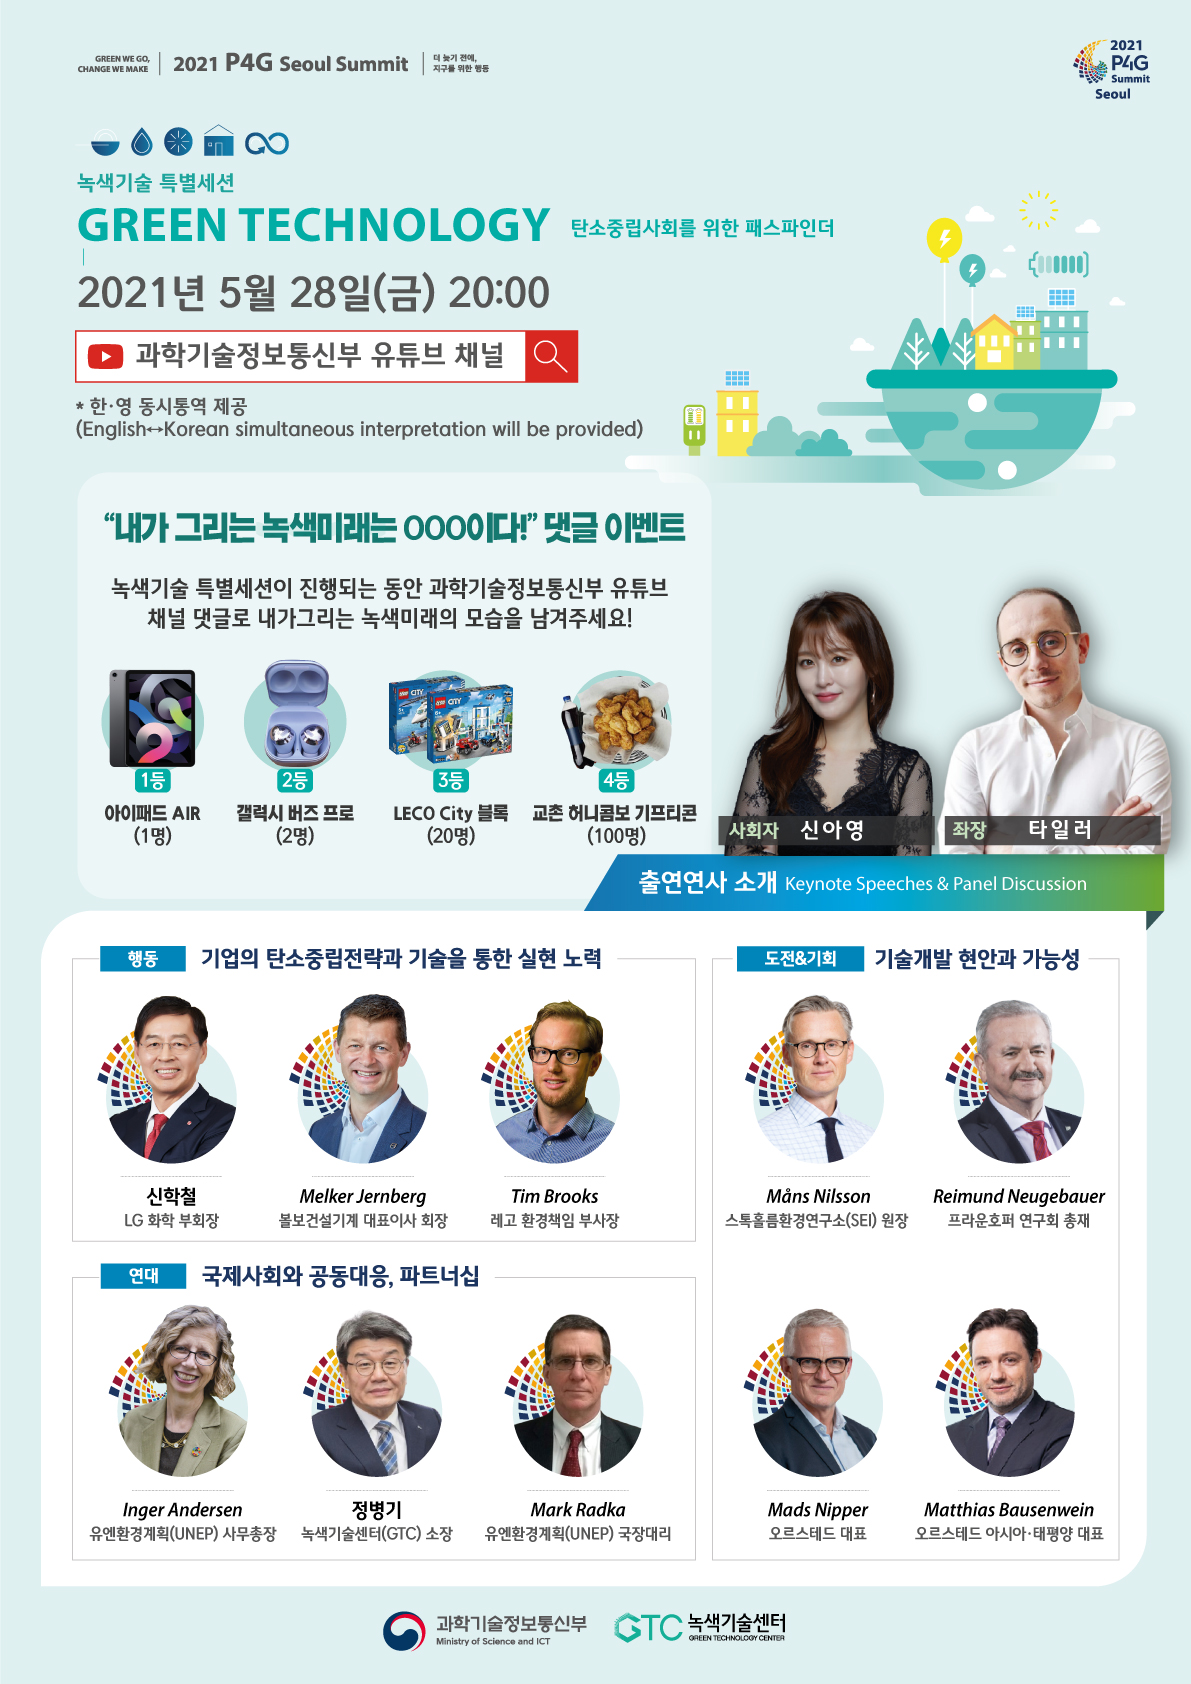  2021 P4G 서울 녹색미래 정상회의 계기 녹색기술세션 개최 안내